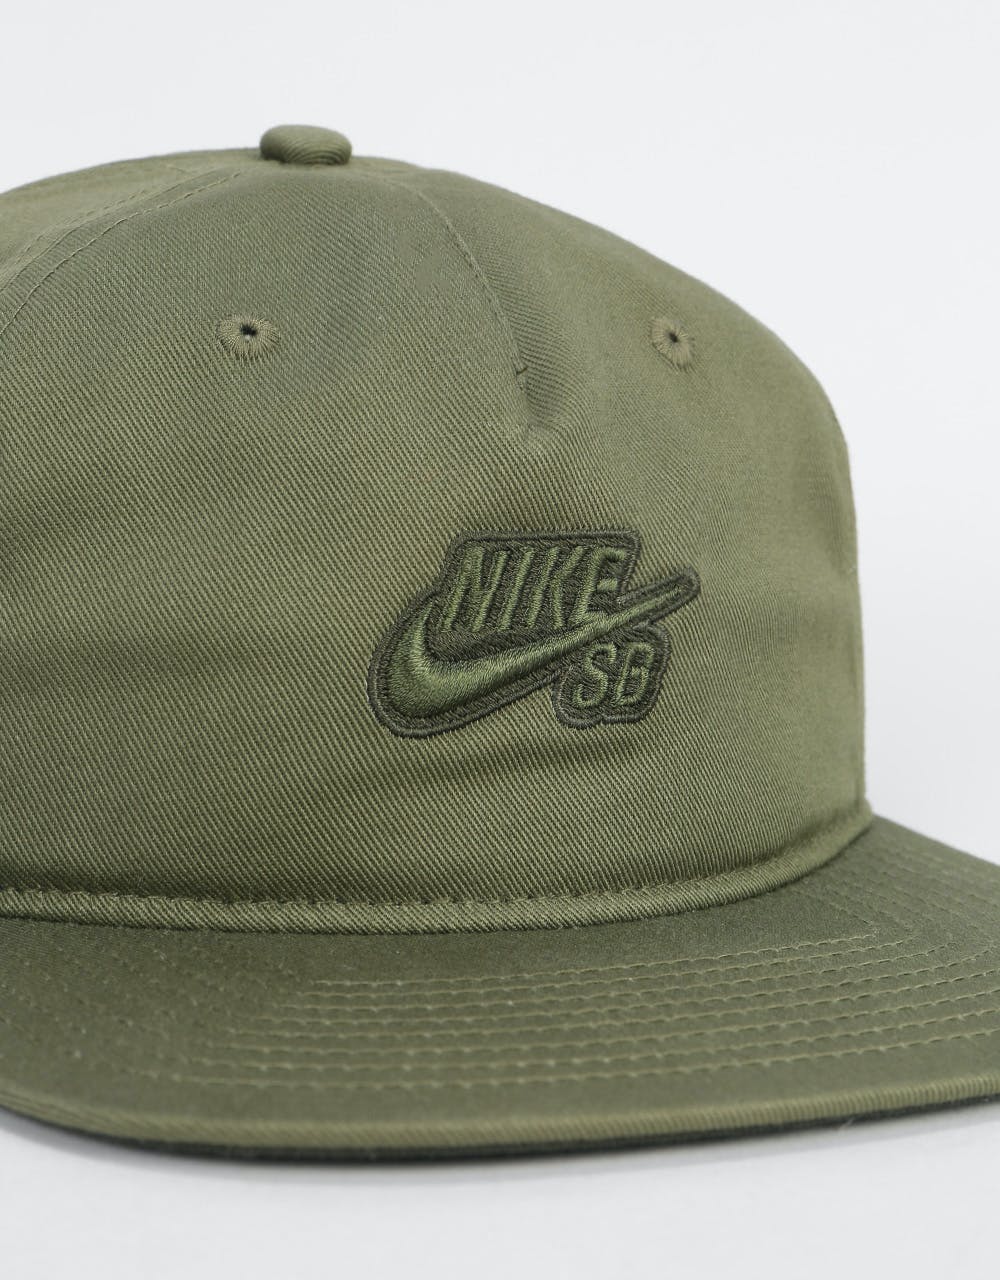 Nike SB Pro Snapback Cap - Medium Olive/Sequoia/Medium Olive